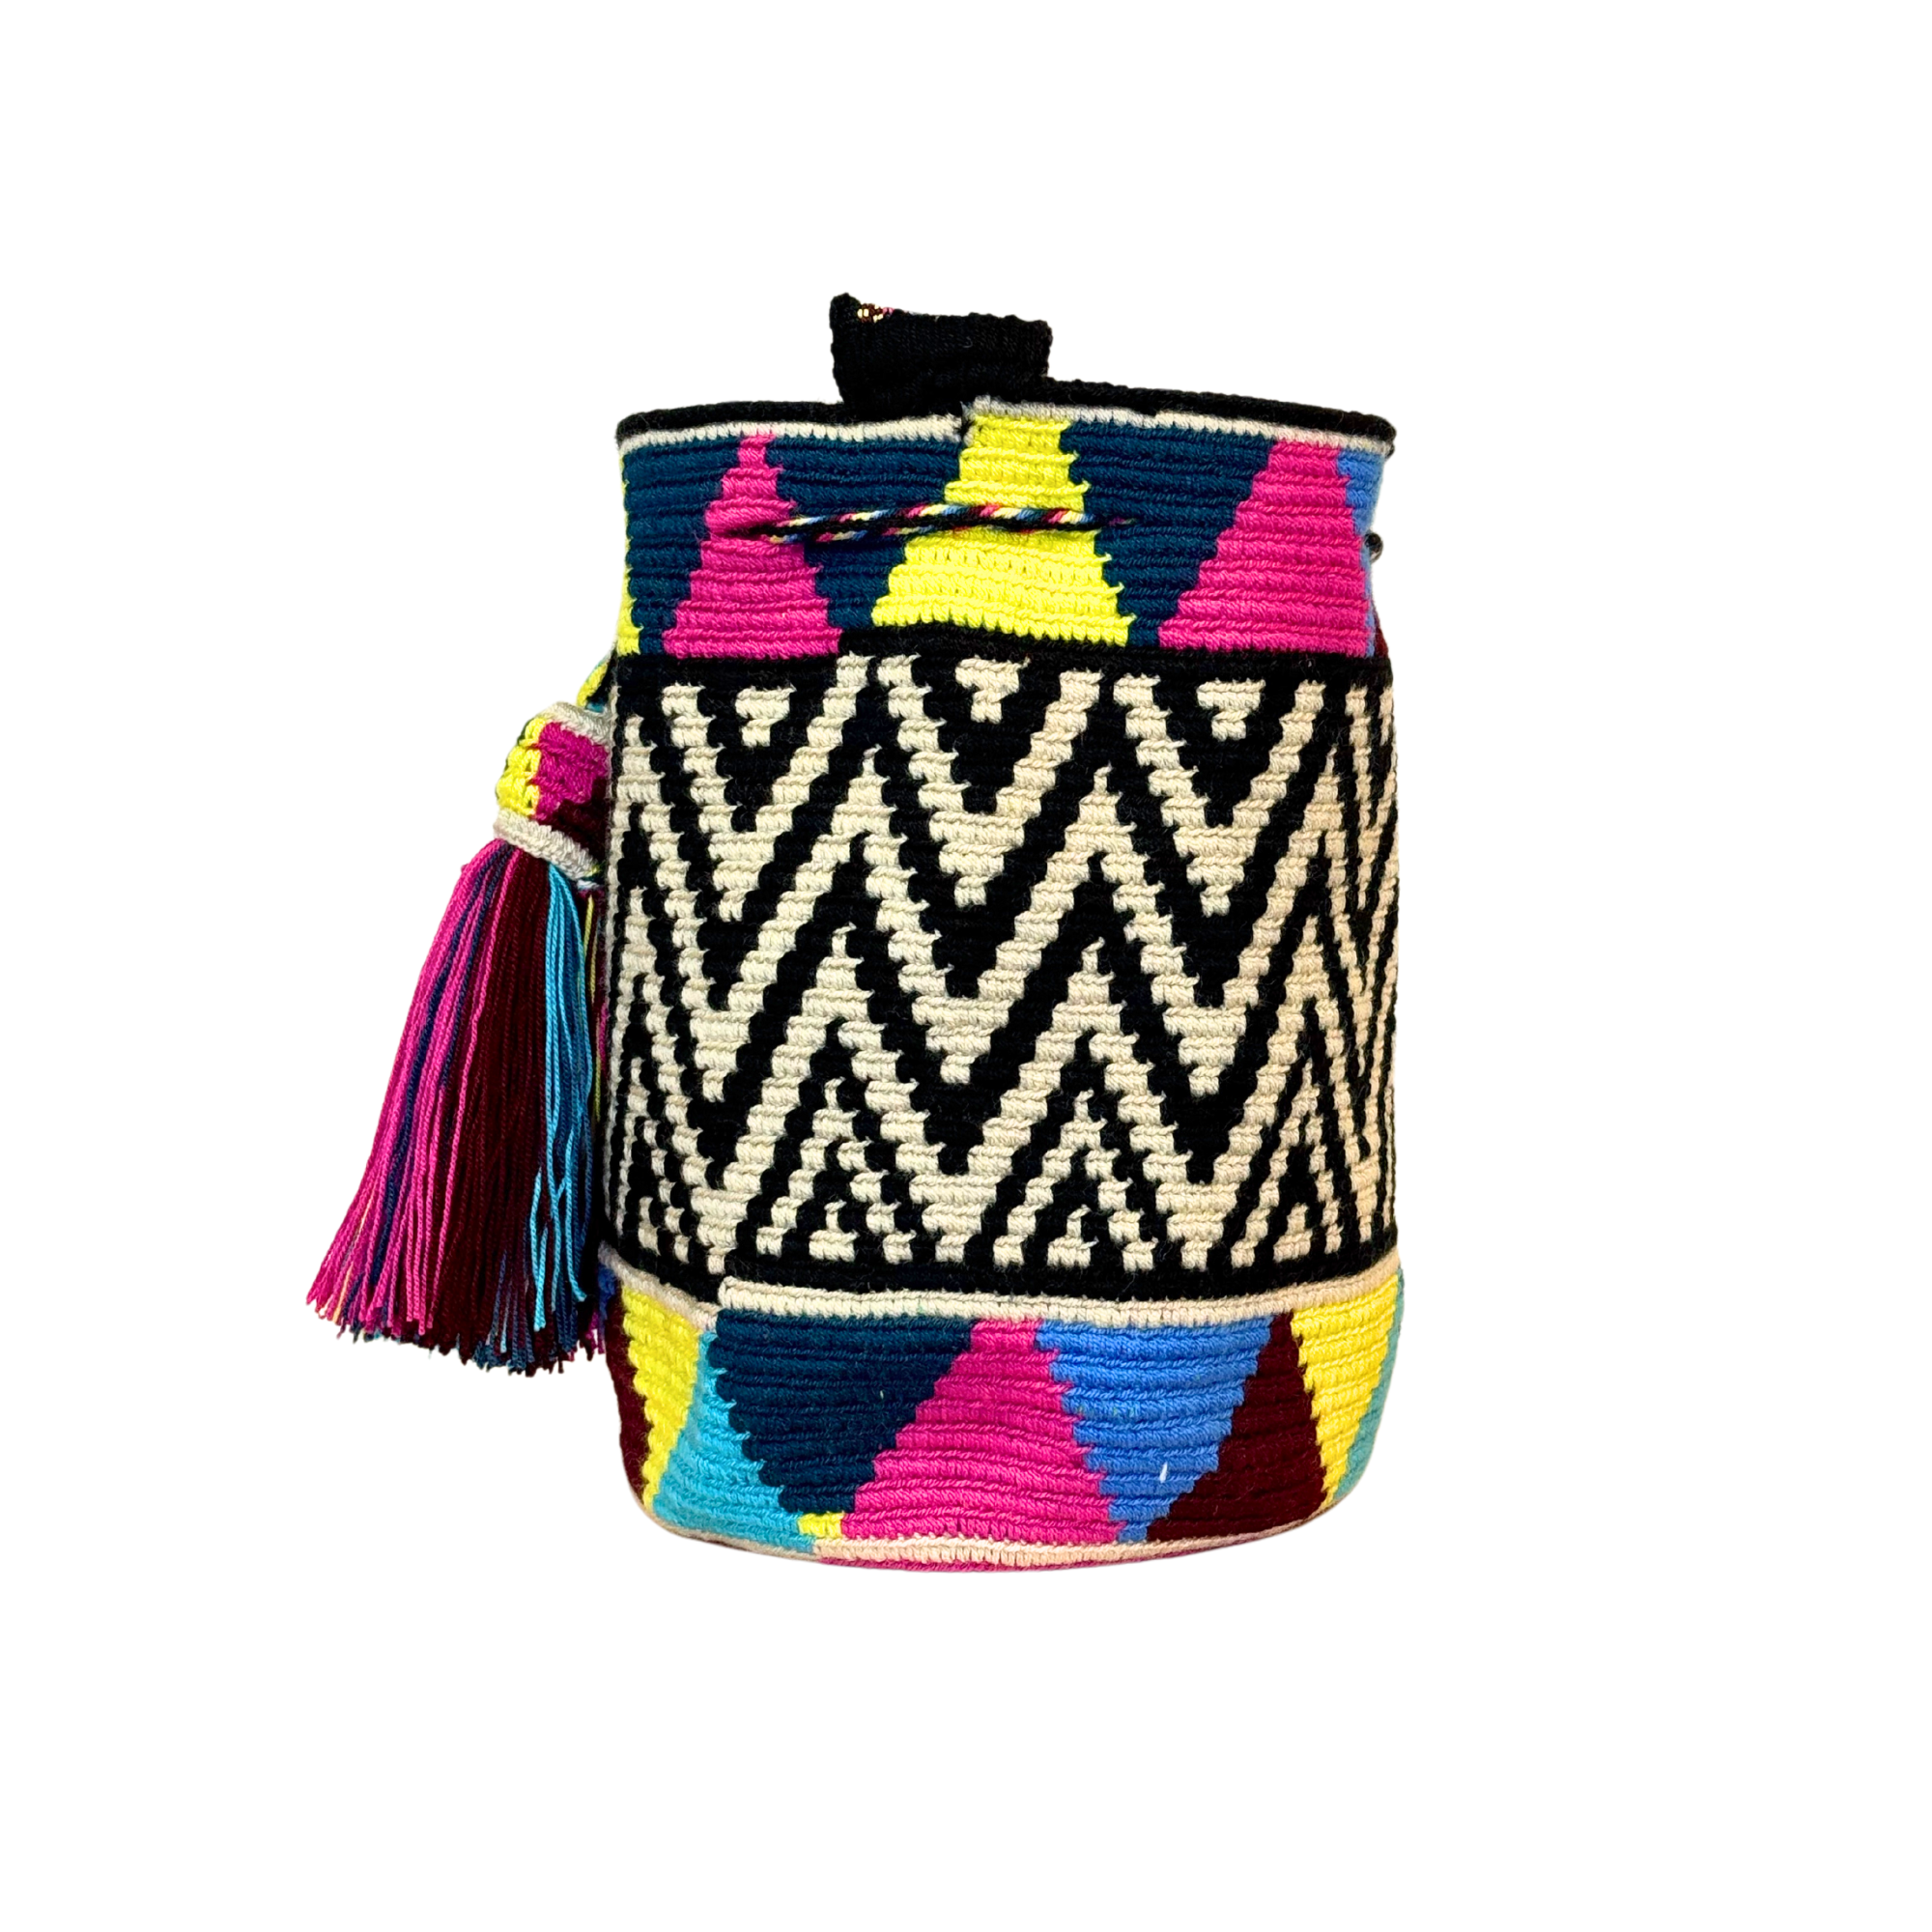 Exclusive Wayuu mochila bag | Medium Woven Crossbody Handmade Gorrito Mochila | Zig zag blue and yellow solid strap